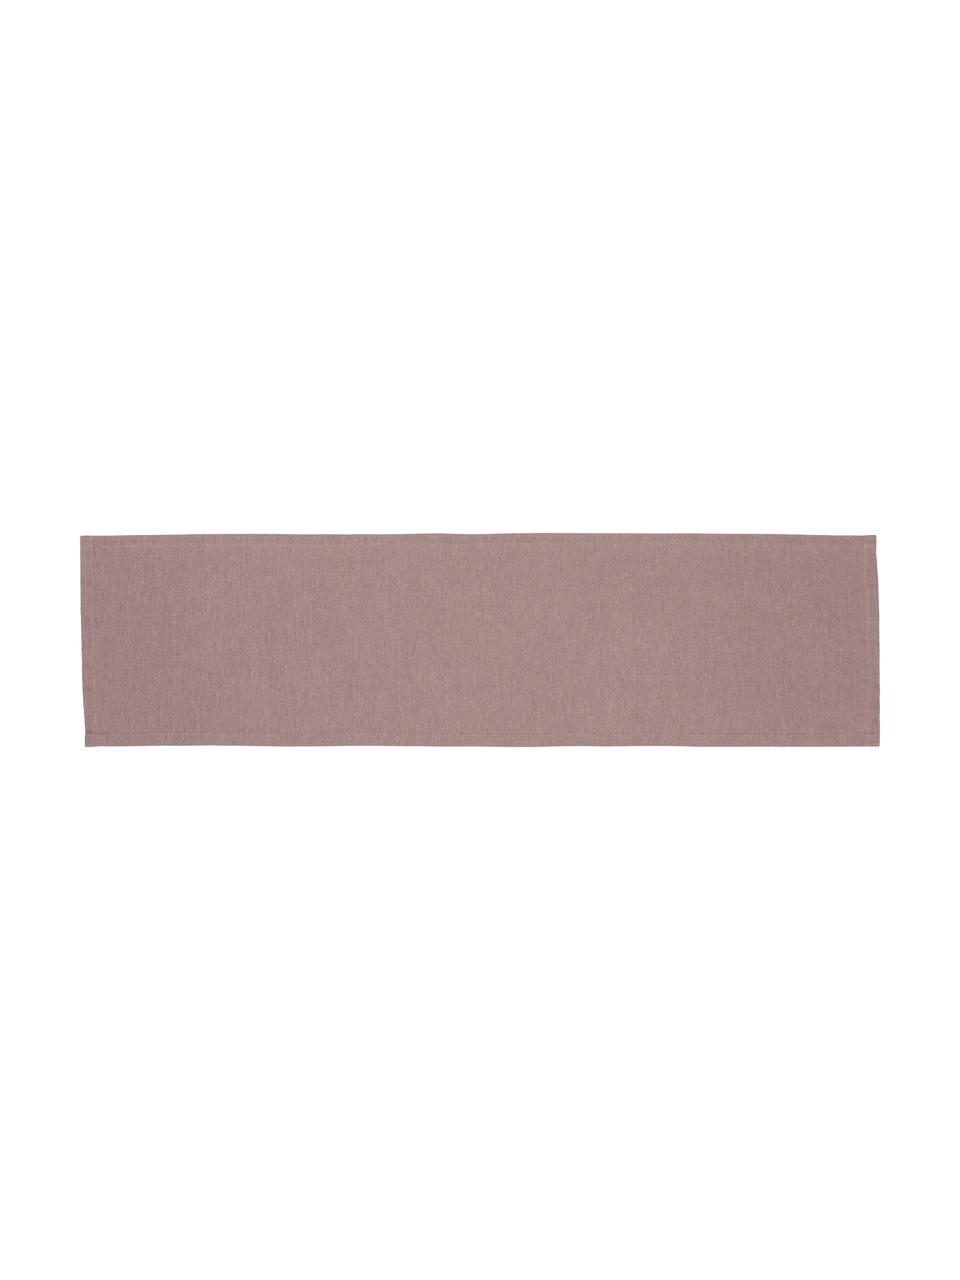 Chemin de table mauve Riva, 55 % coton, 45 % polyester, Mauve, larg. 40 x long. 150 cm